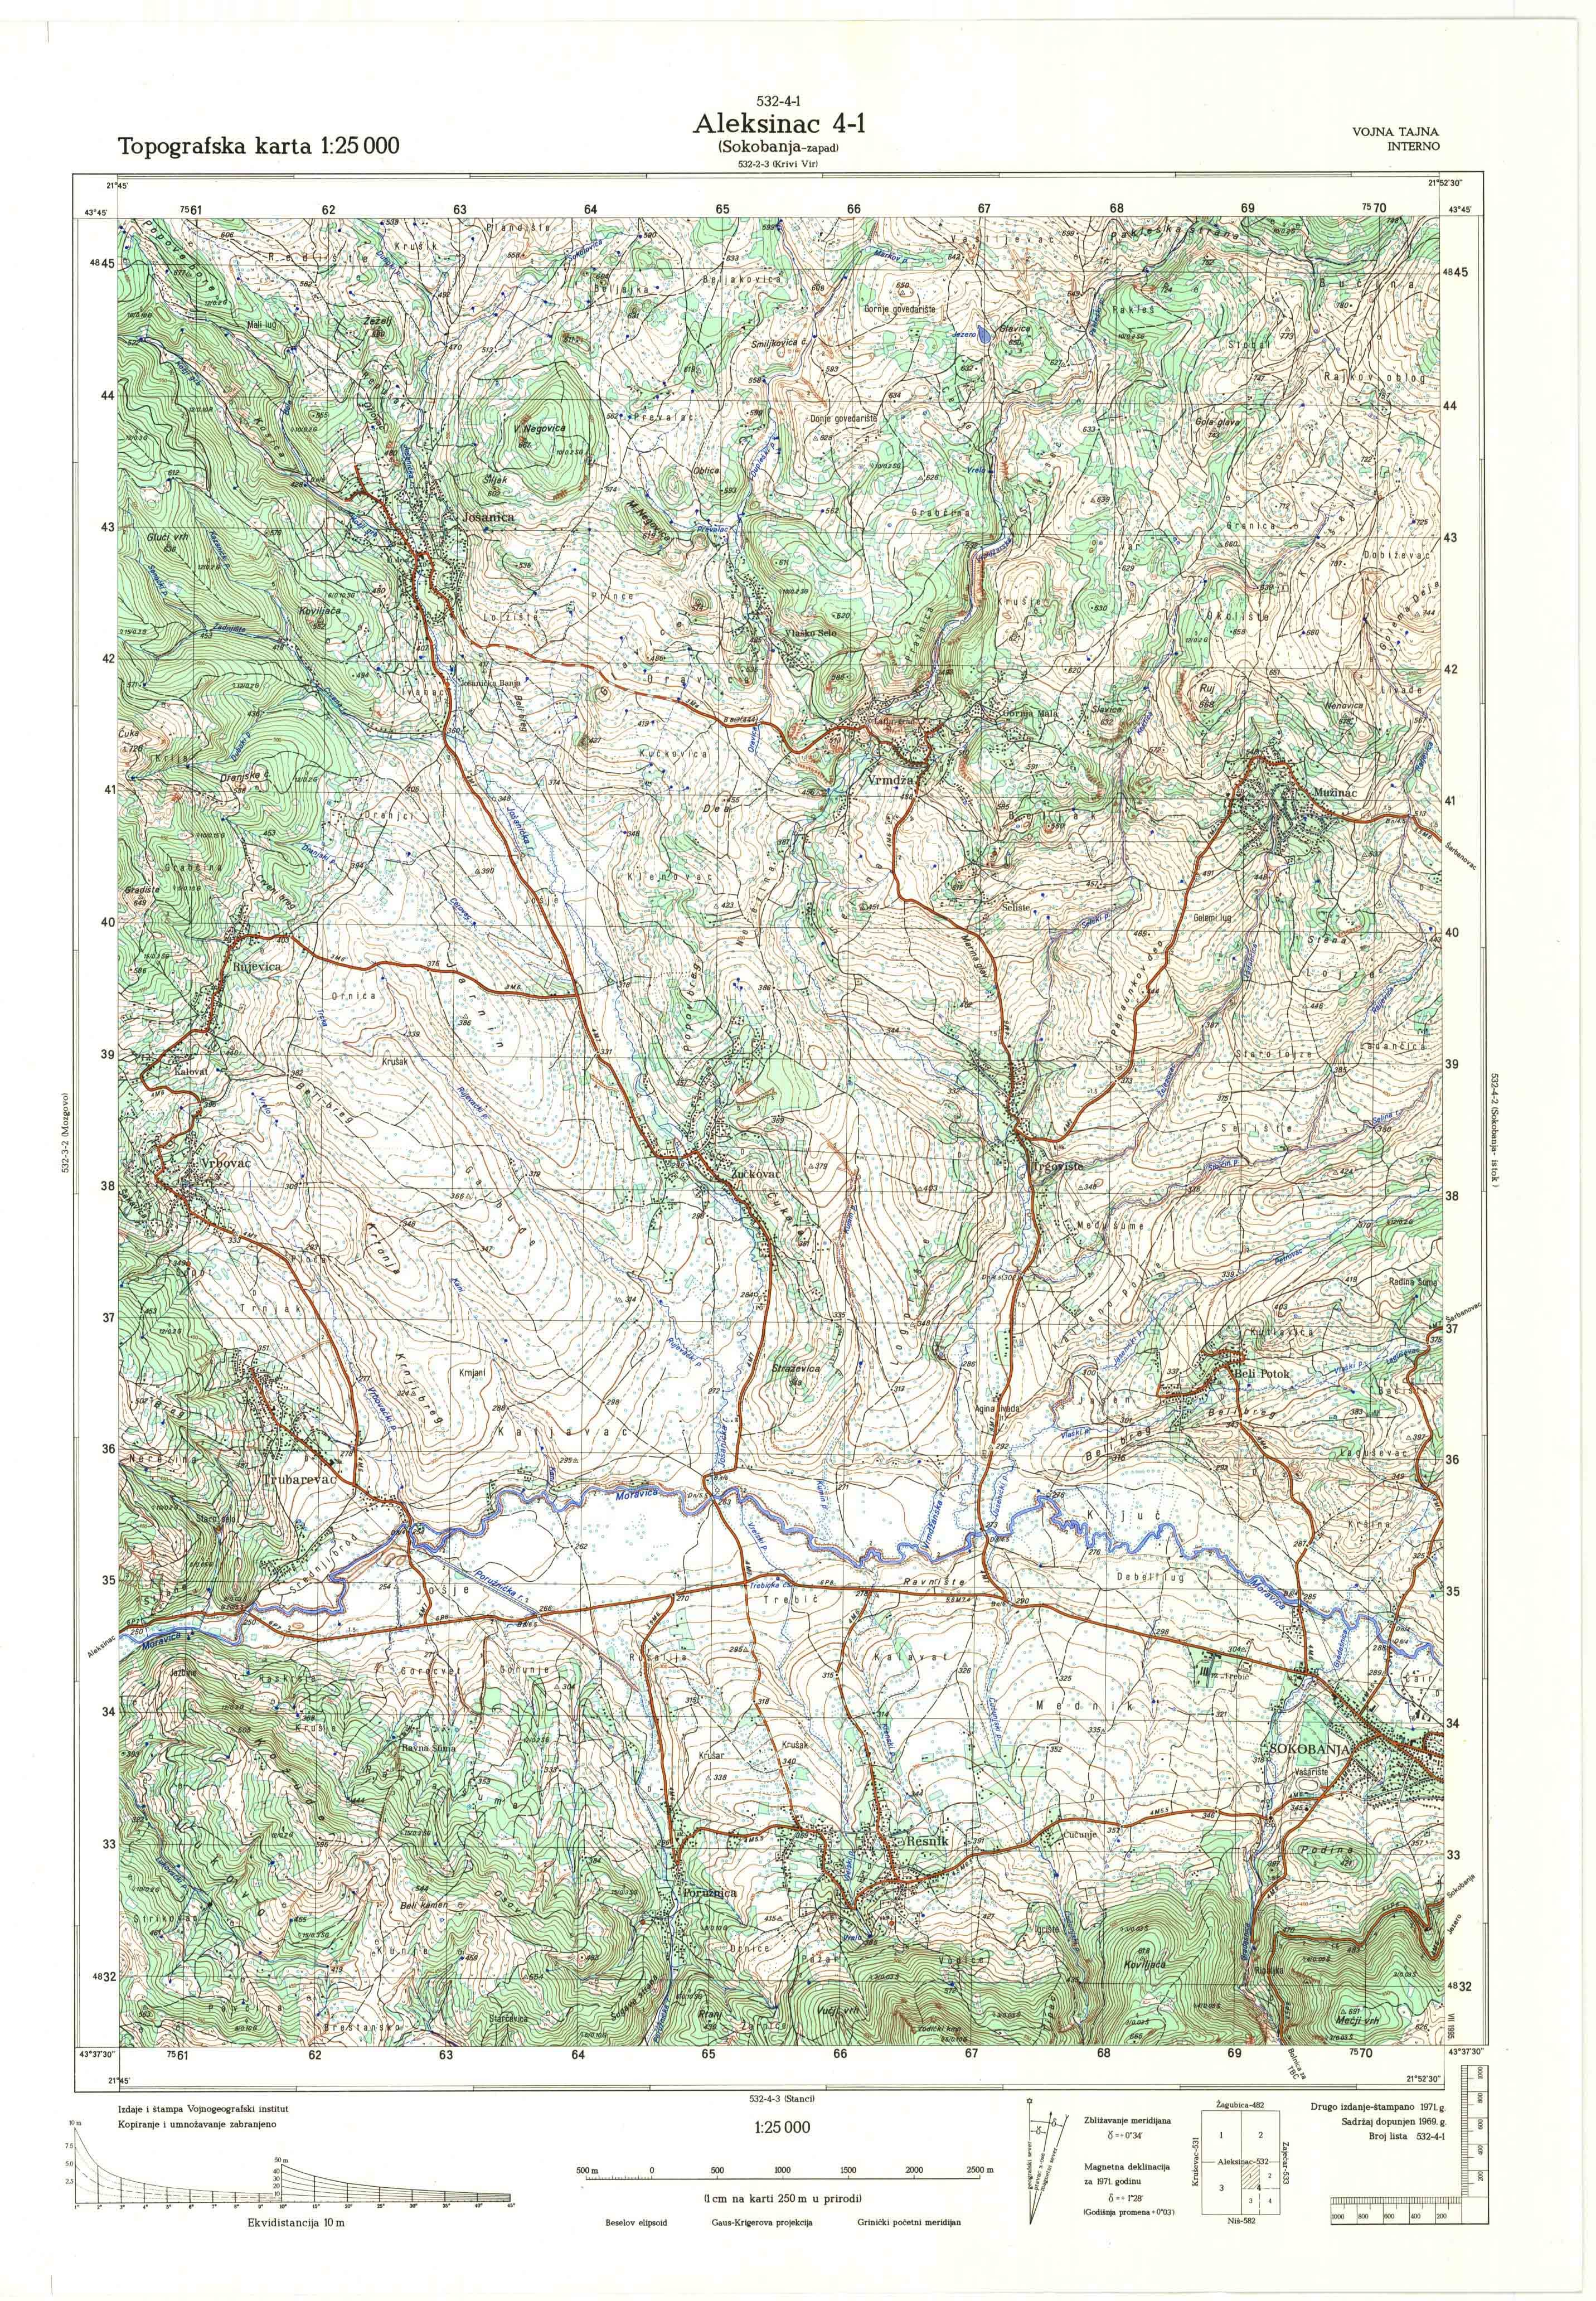  topografska karta srbije 25000 JNA  Aleksinac